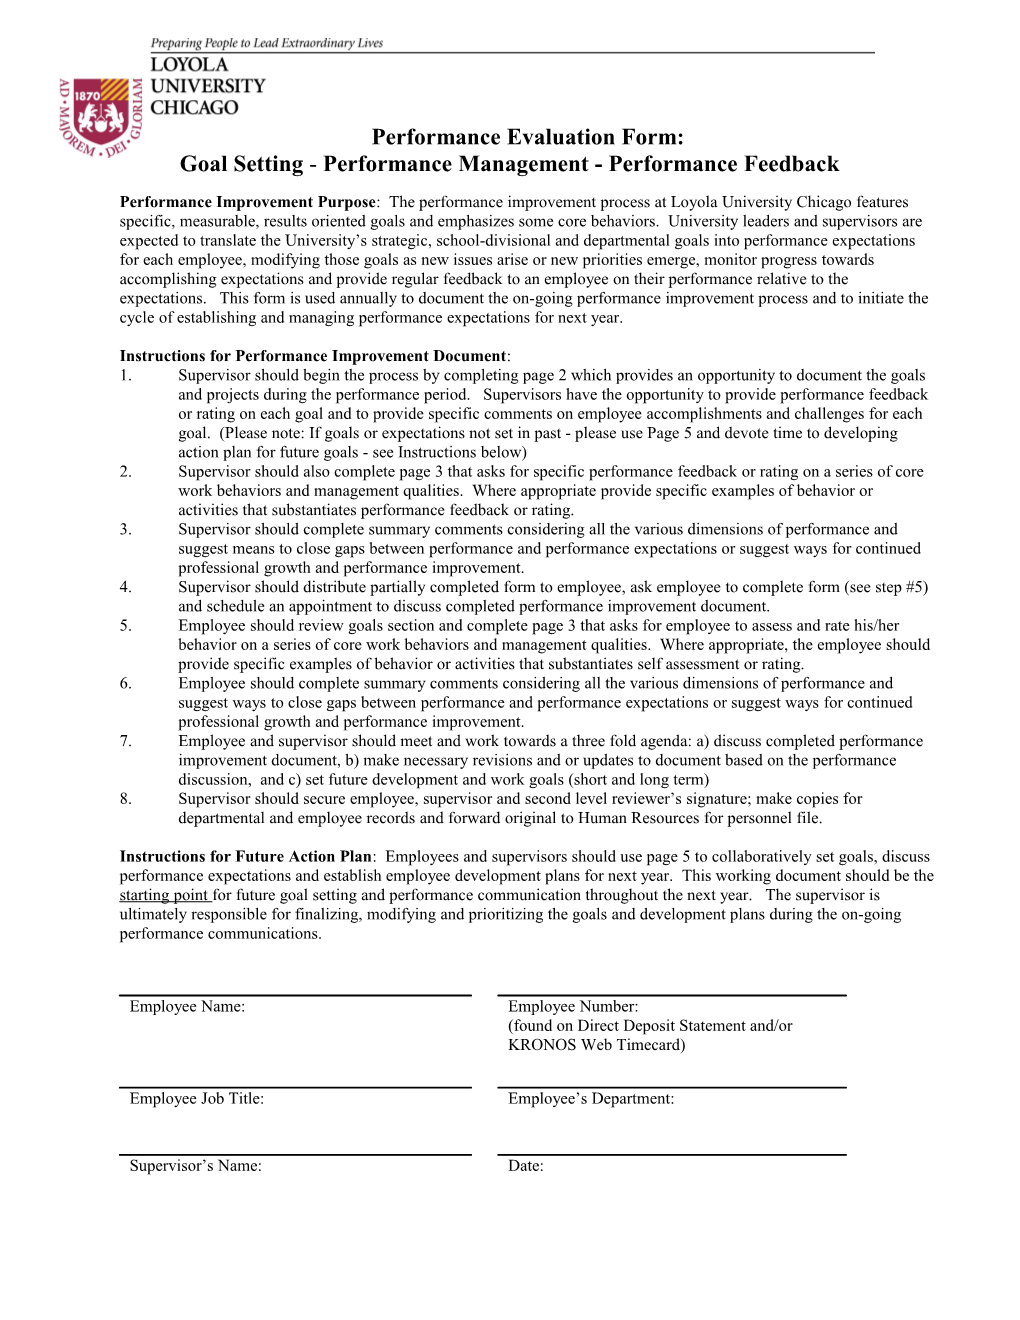 Goal Setting - Performance Management - Performance Feedback